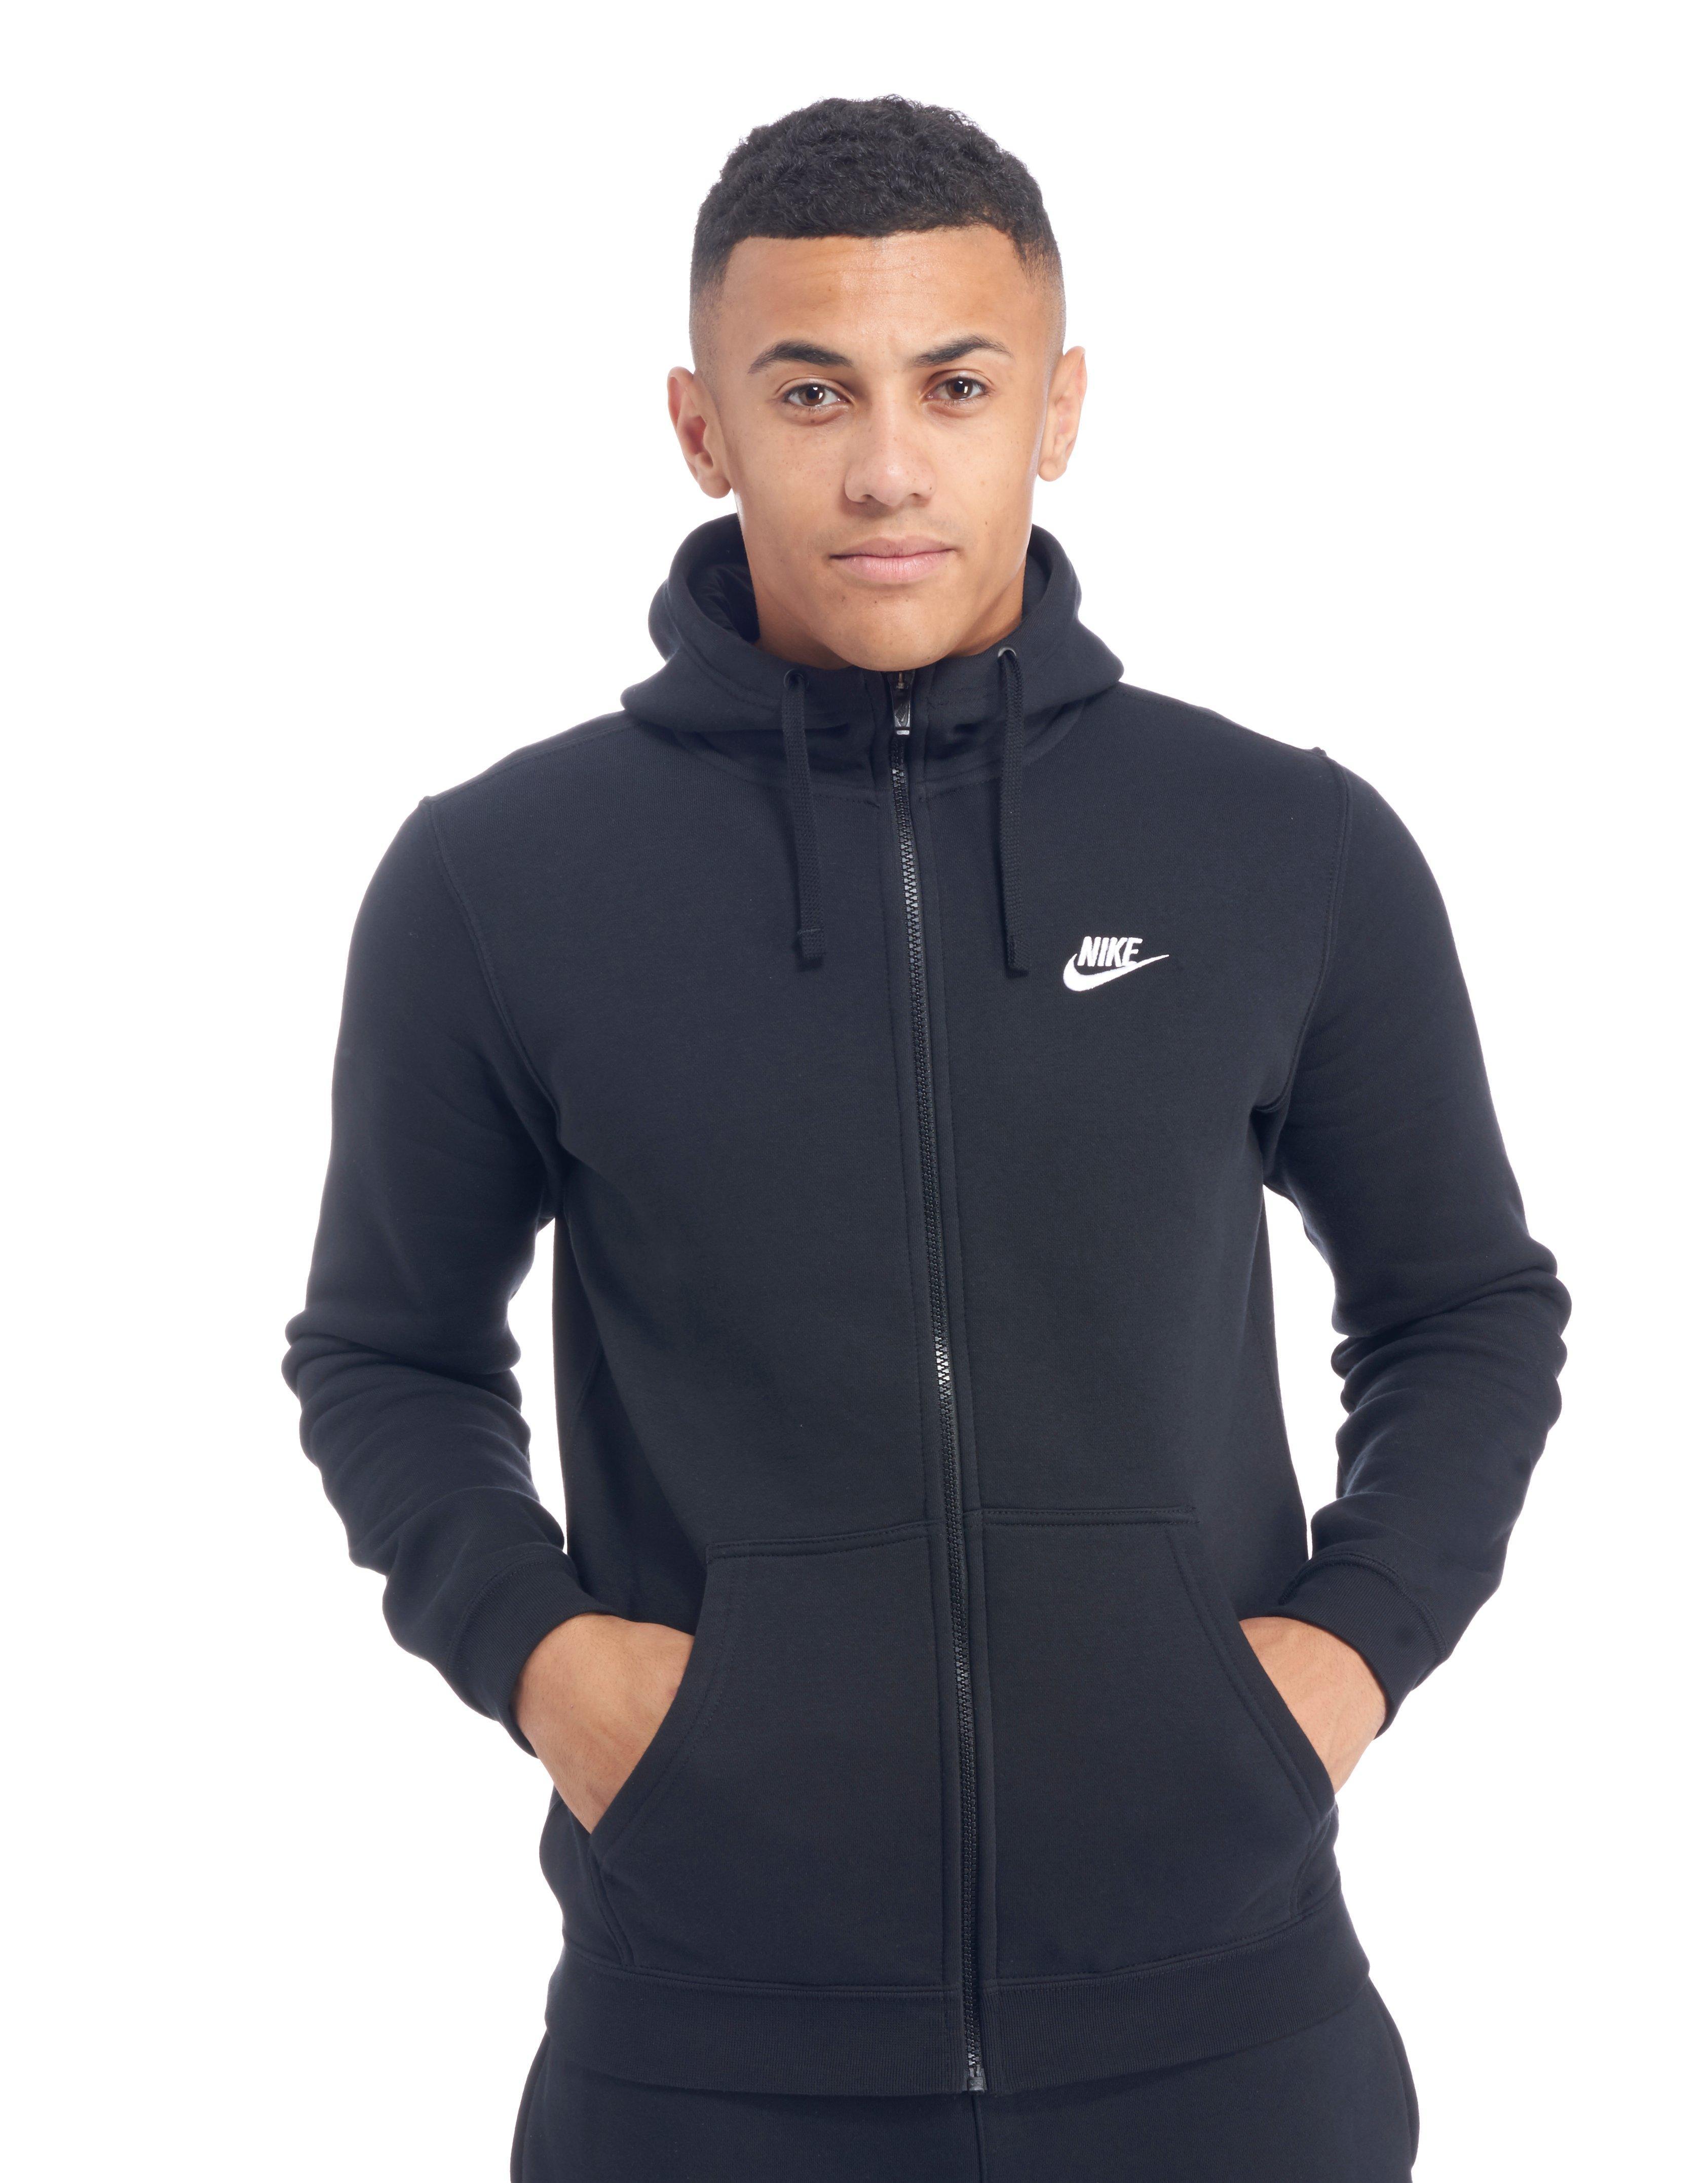 Lyst - Nike Foundation Fleece Full Zip Hoody in Black for Men